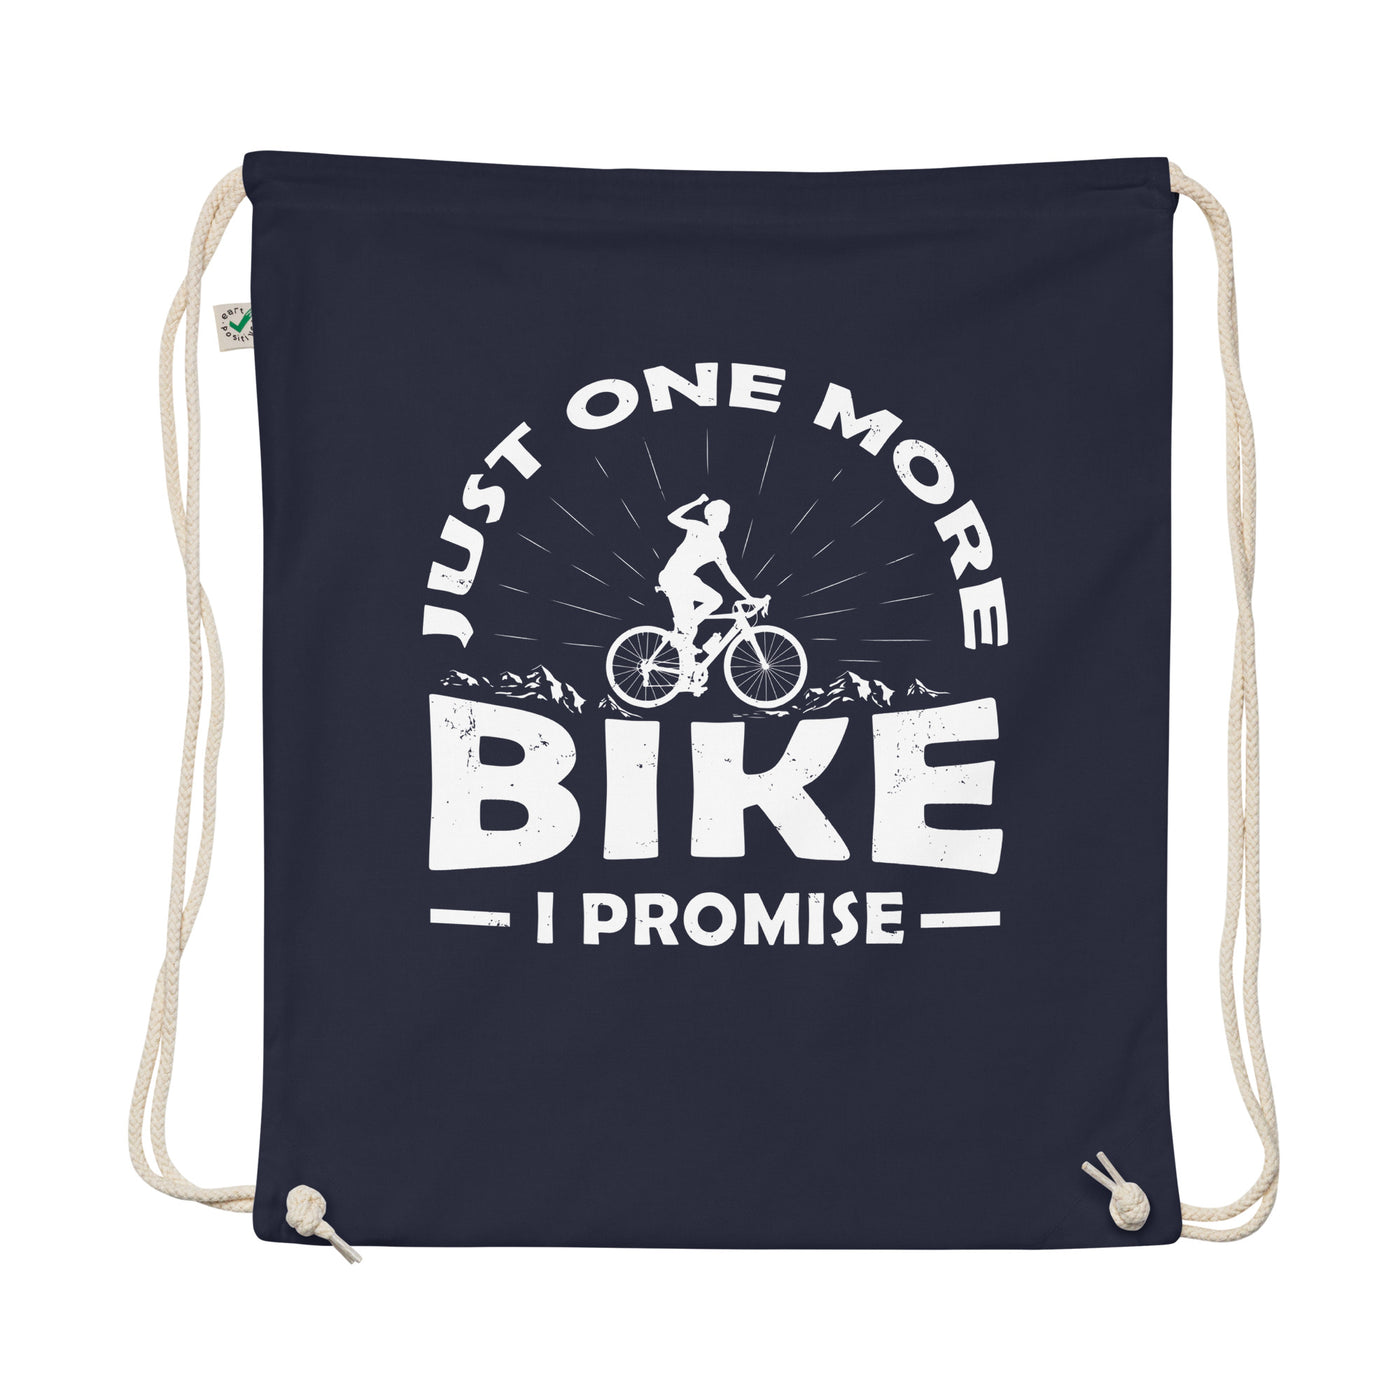 Just One More Bike, I Promise - Organic Turnbeutel fahrrad